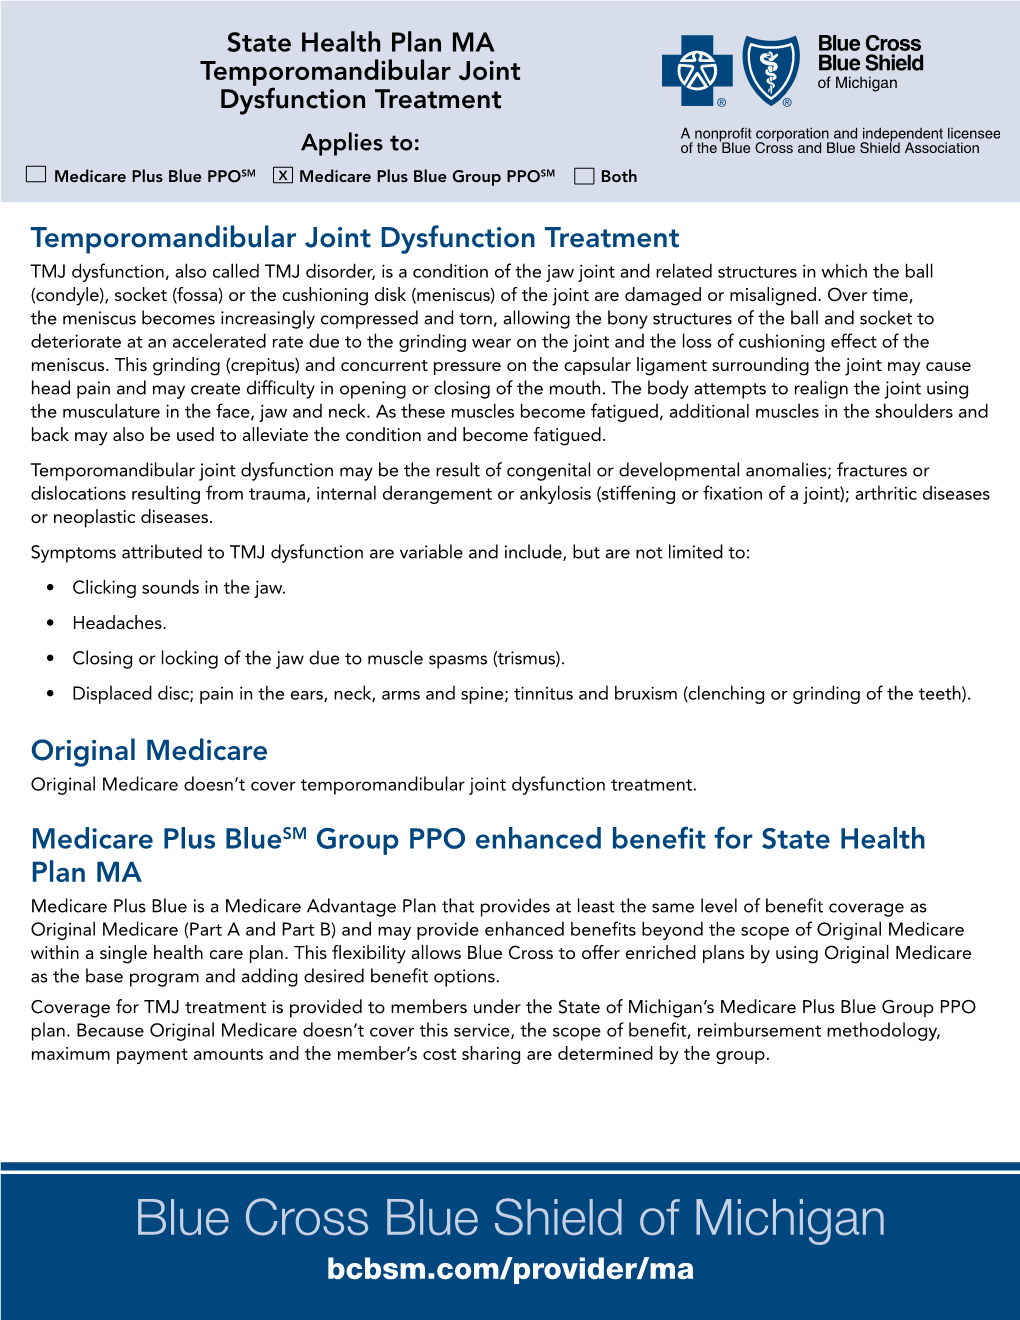 State Health Plan MA Temporomandibular Joint Dysfunction Treatment Applies To: Medicare Plus Blue PPOSM X Medicare Plus Blue Group PPOSM Both